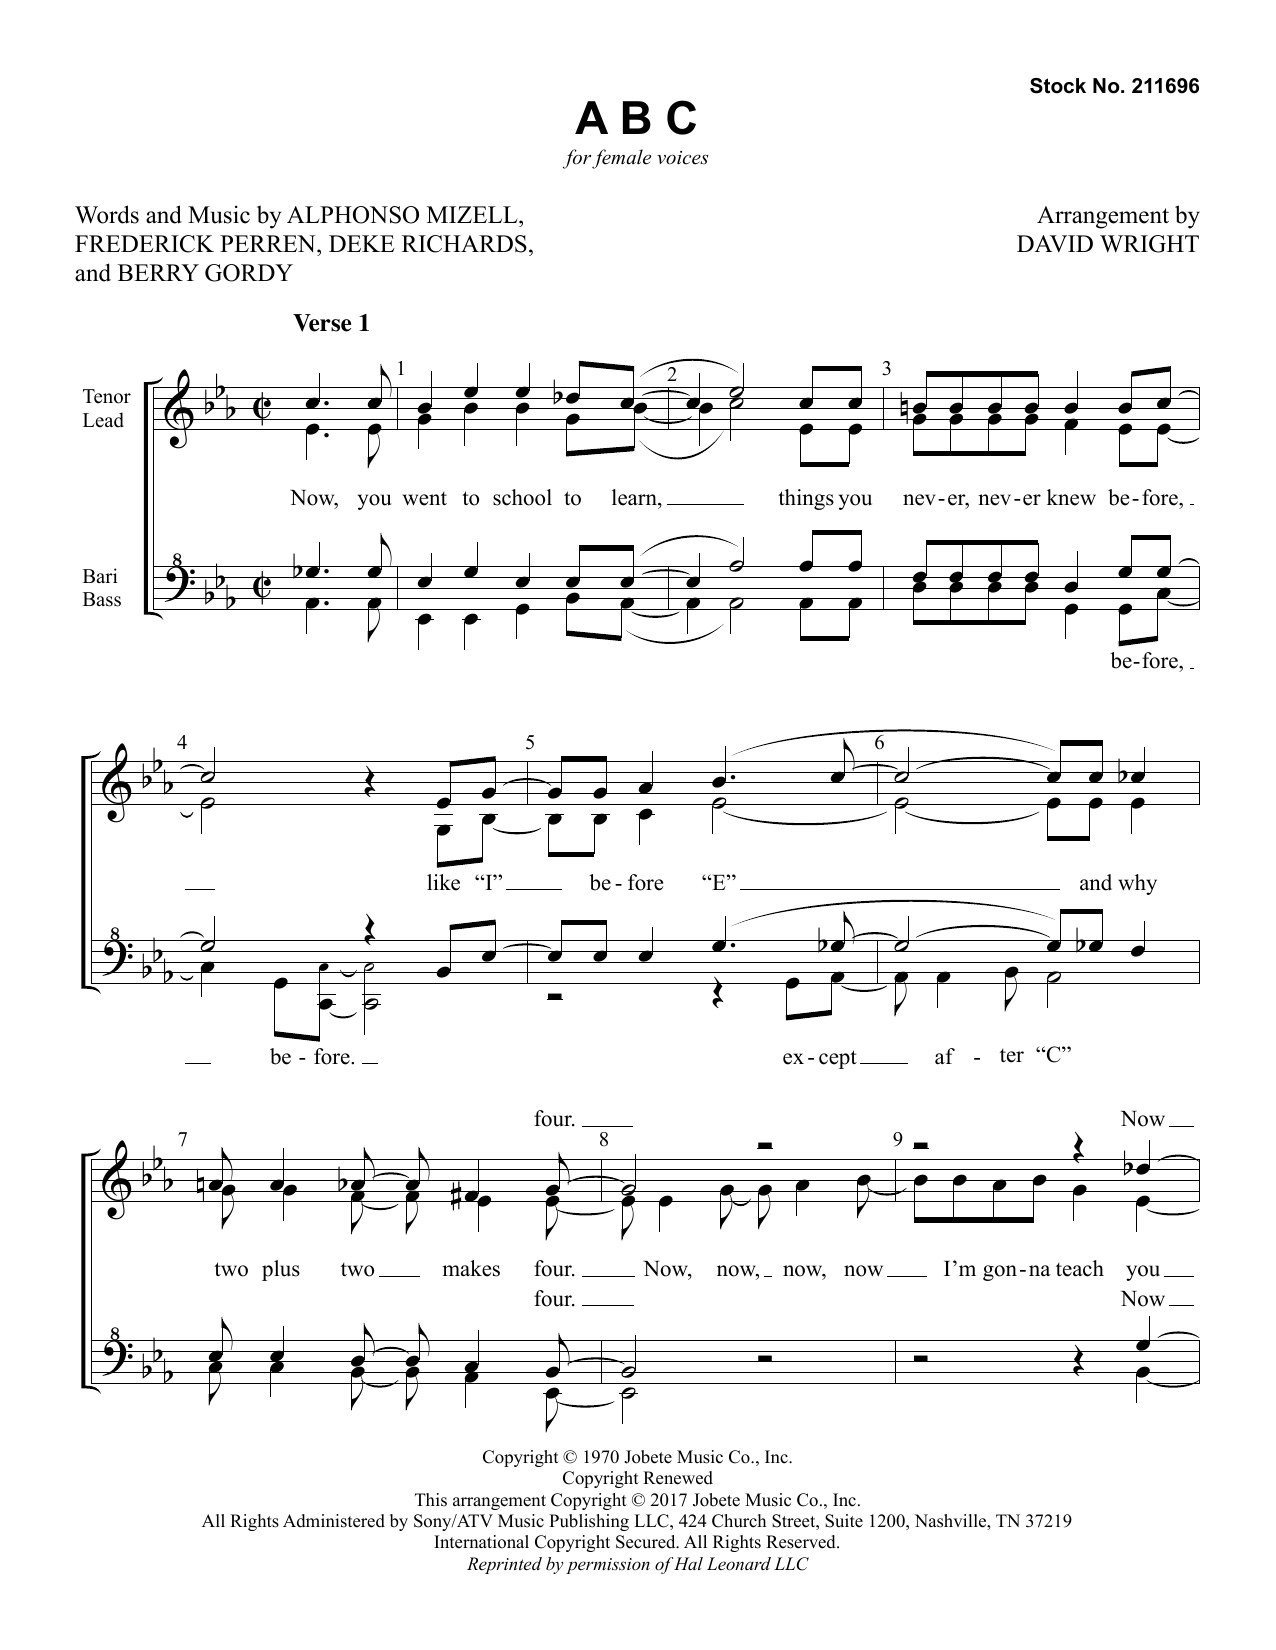 Jackson 5 ABC (arr. David Wright) sheet music notes and chords arranged for SATB Choir